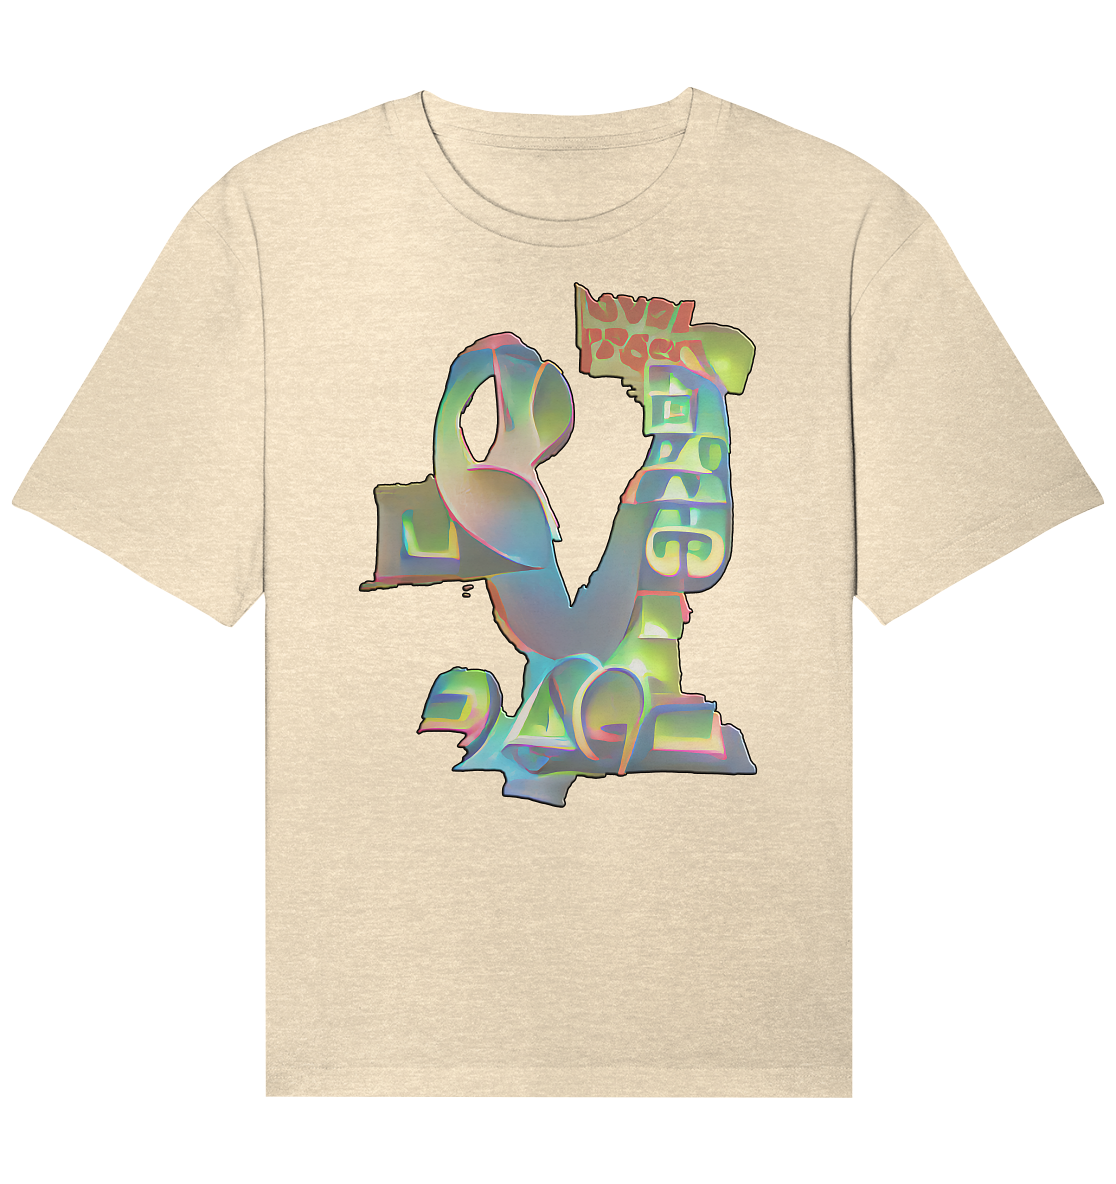 Peace & Love - Organic Relaxed Shirt